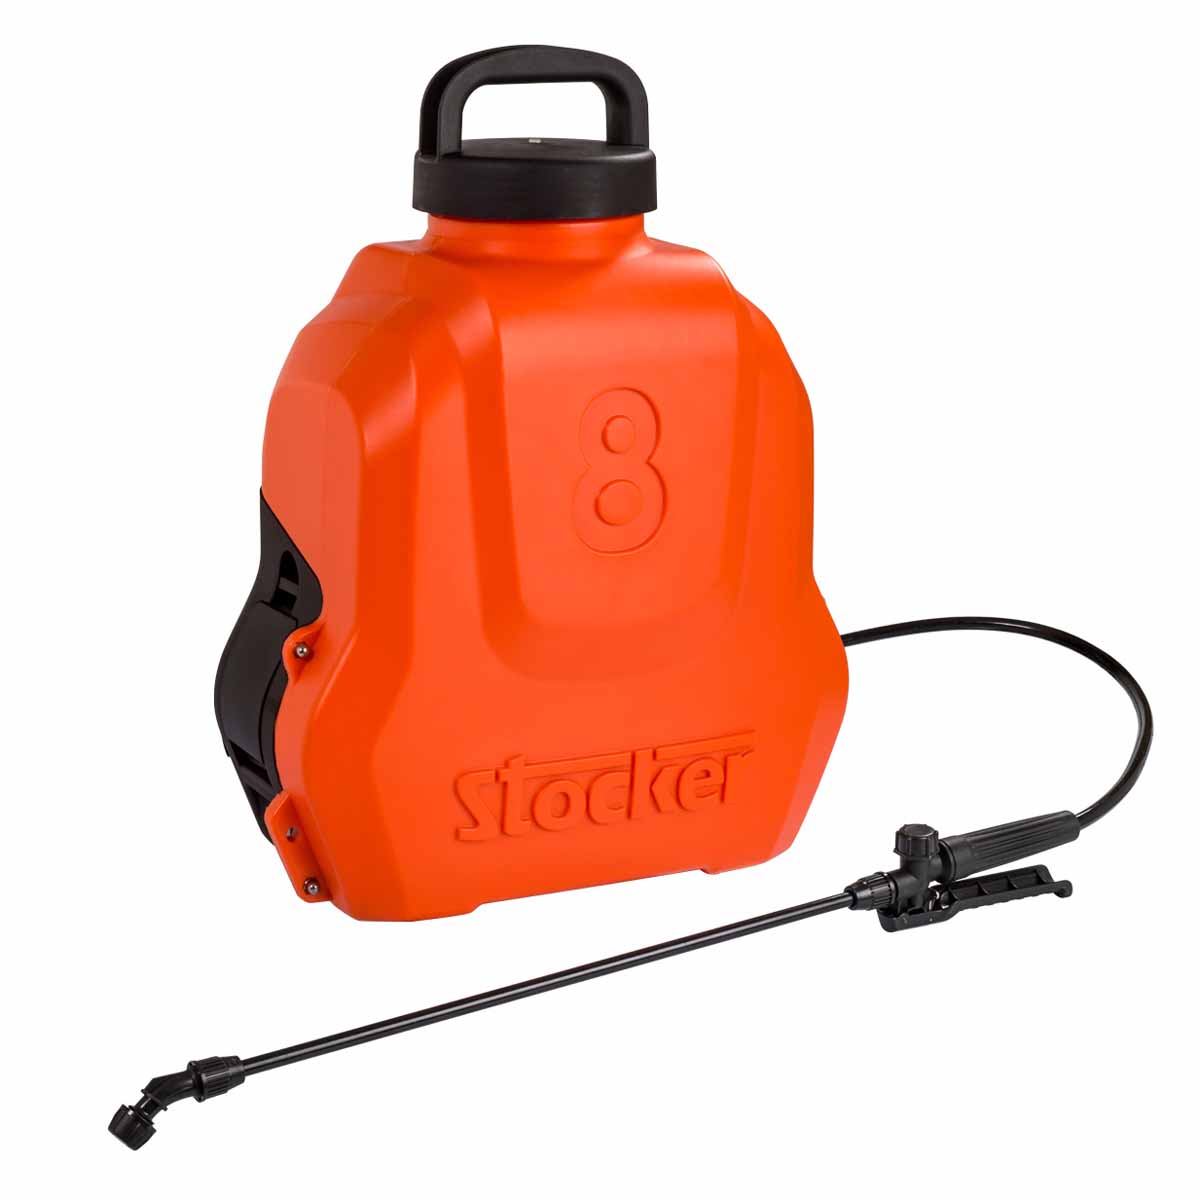 Stocker Pompa a batteria Li-lon 8 litri